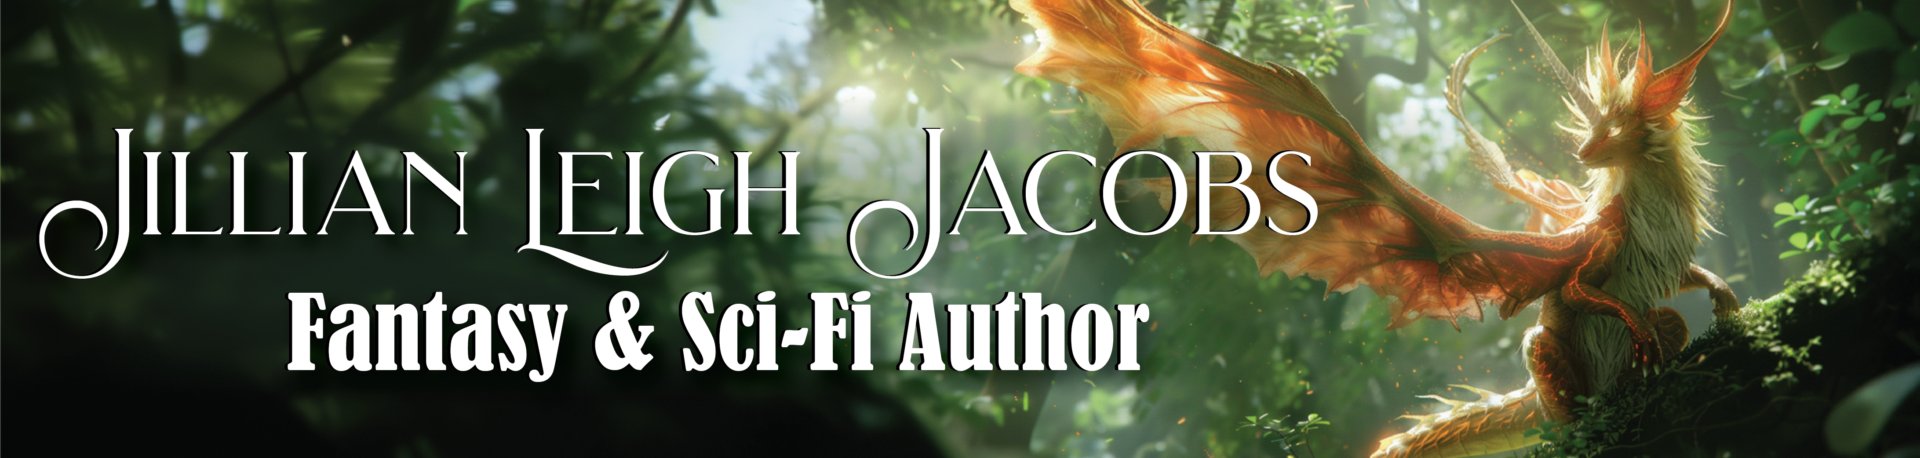 jillian leigh jacobs fantasy and sci fi author